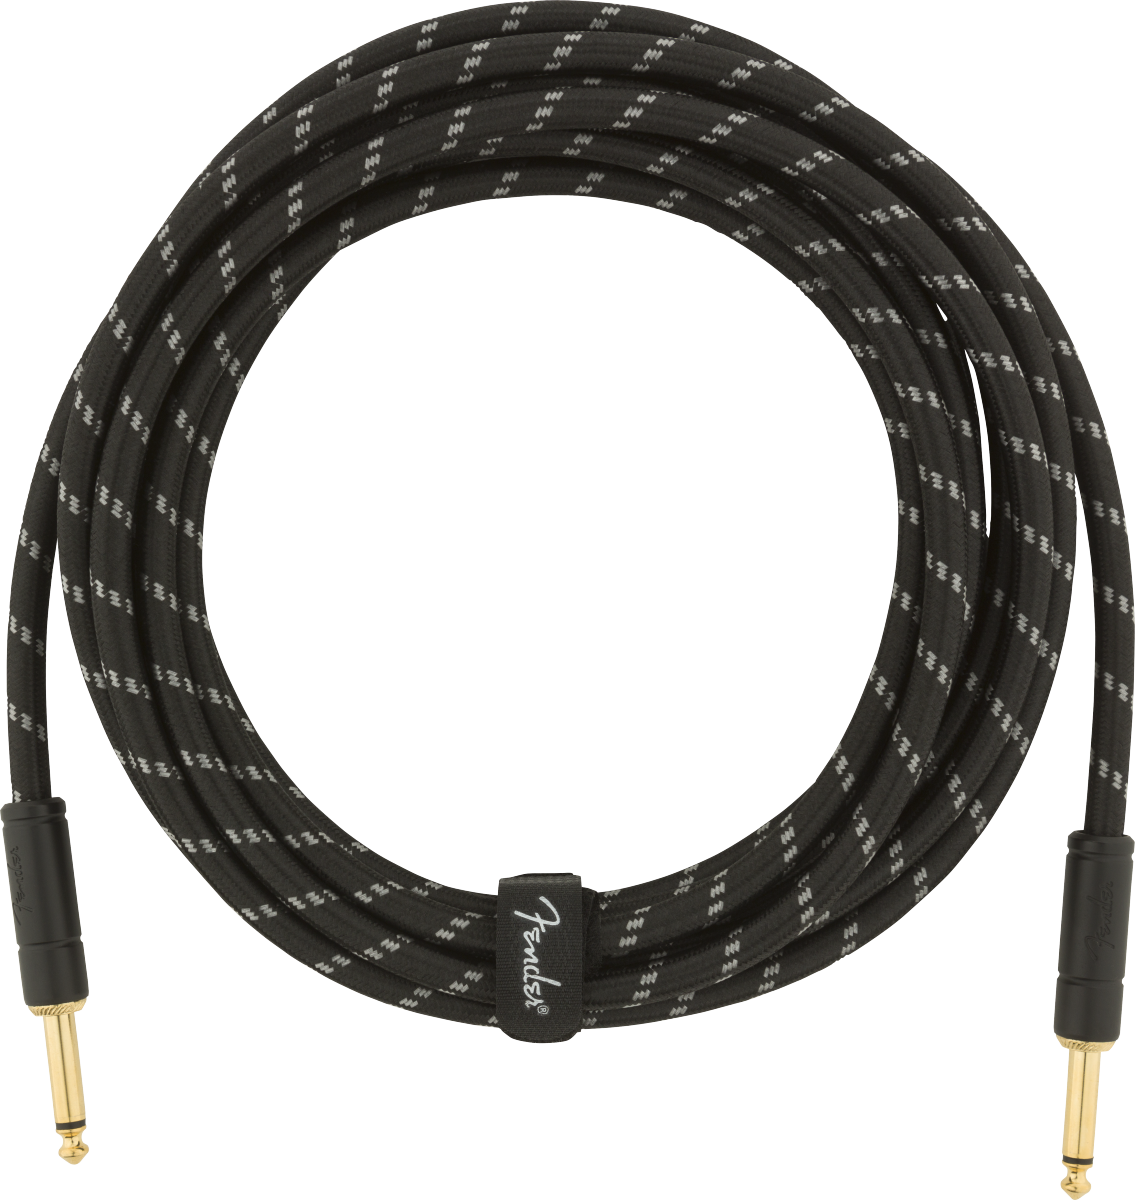 Fender Deluxe Instrument Cable Droit/droit 15ft Black Tweed - Cable - Main picture